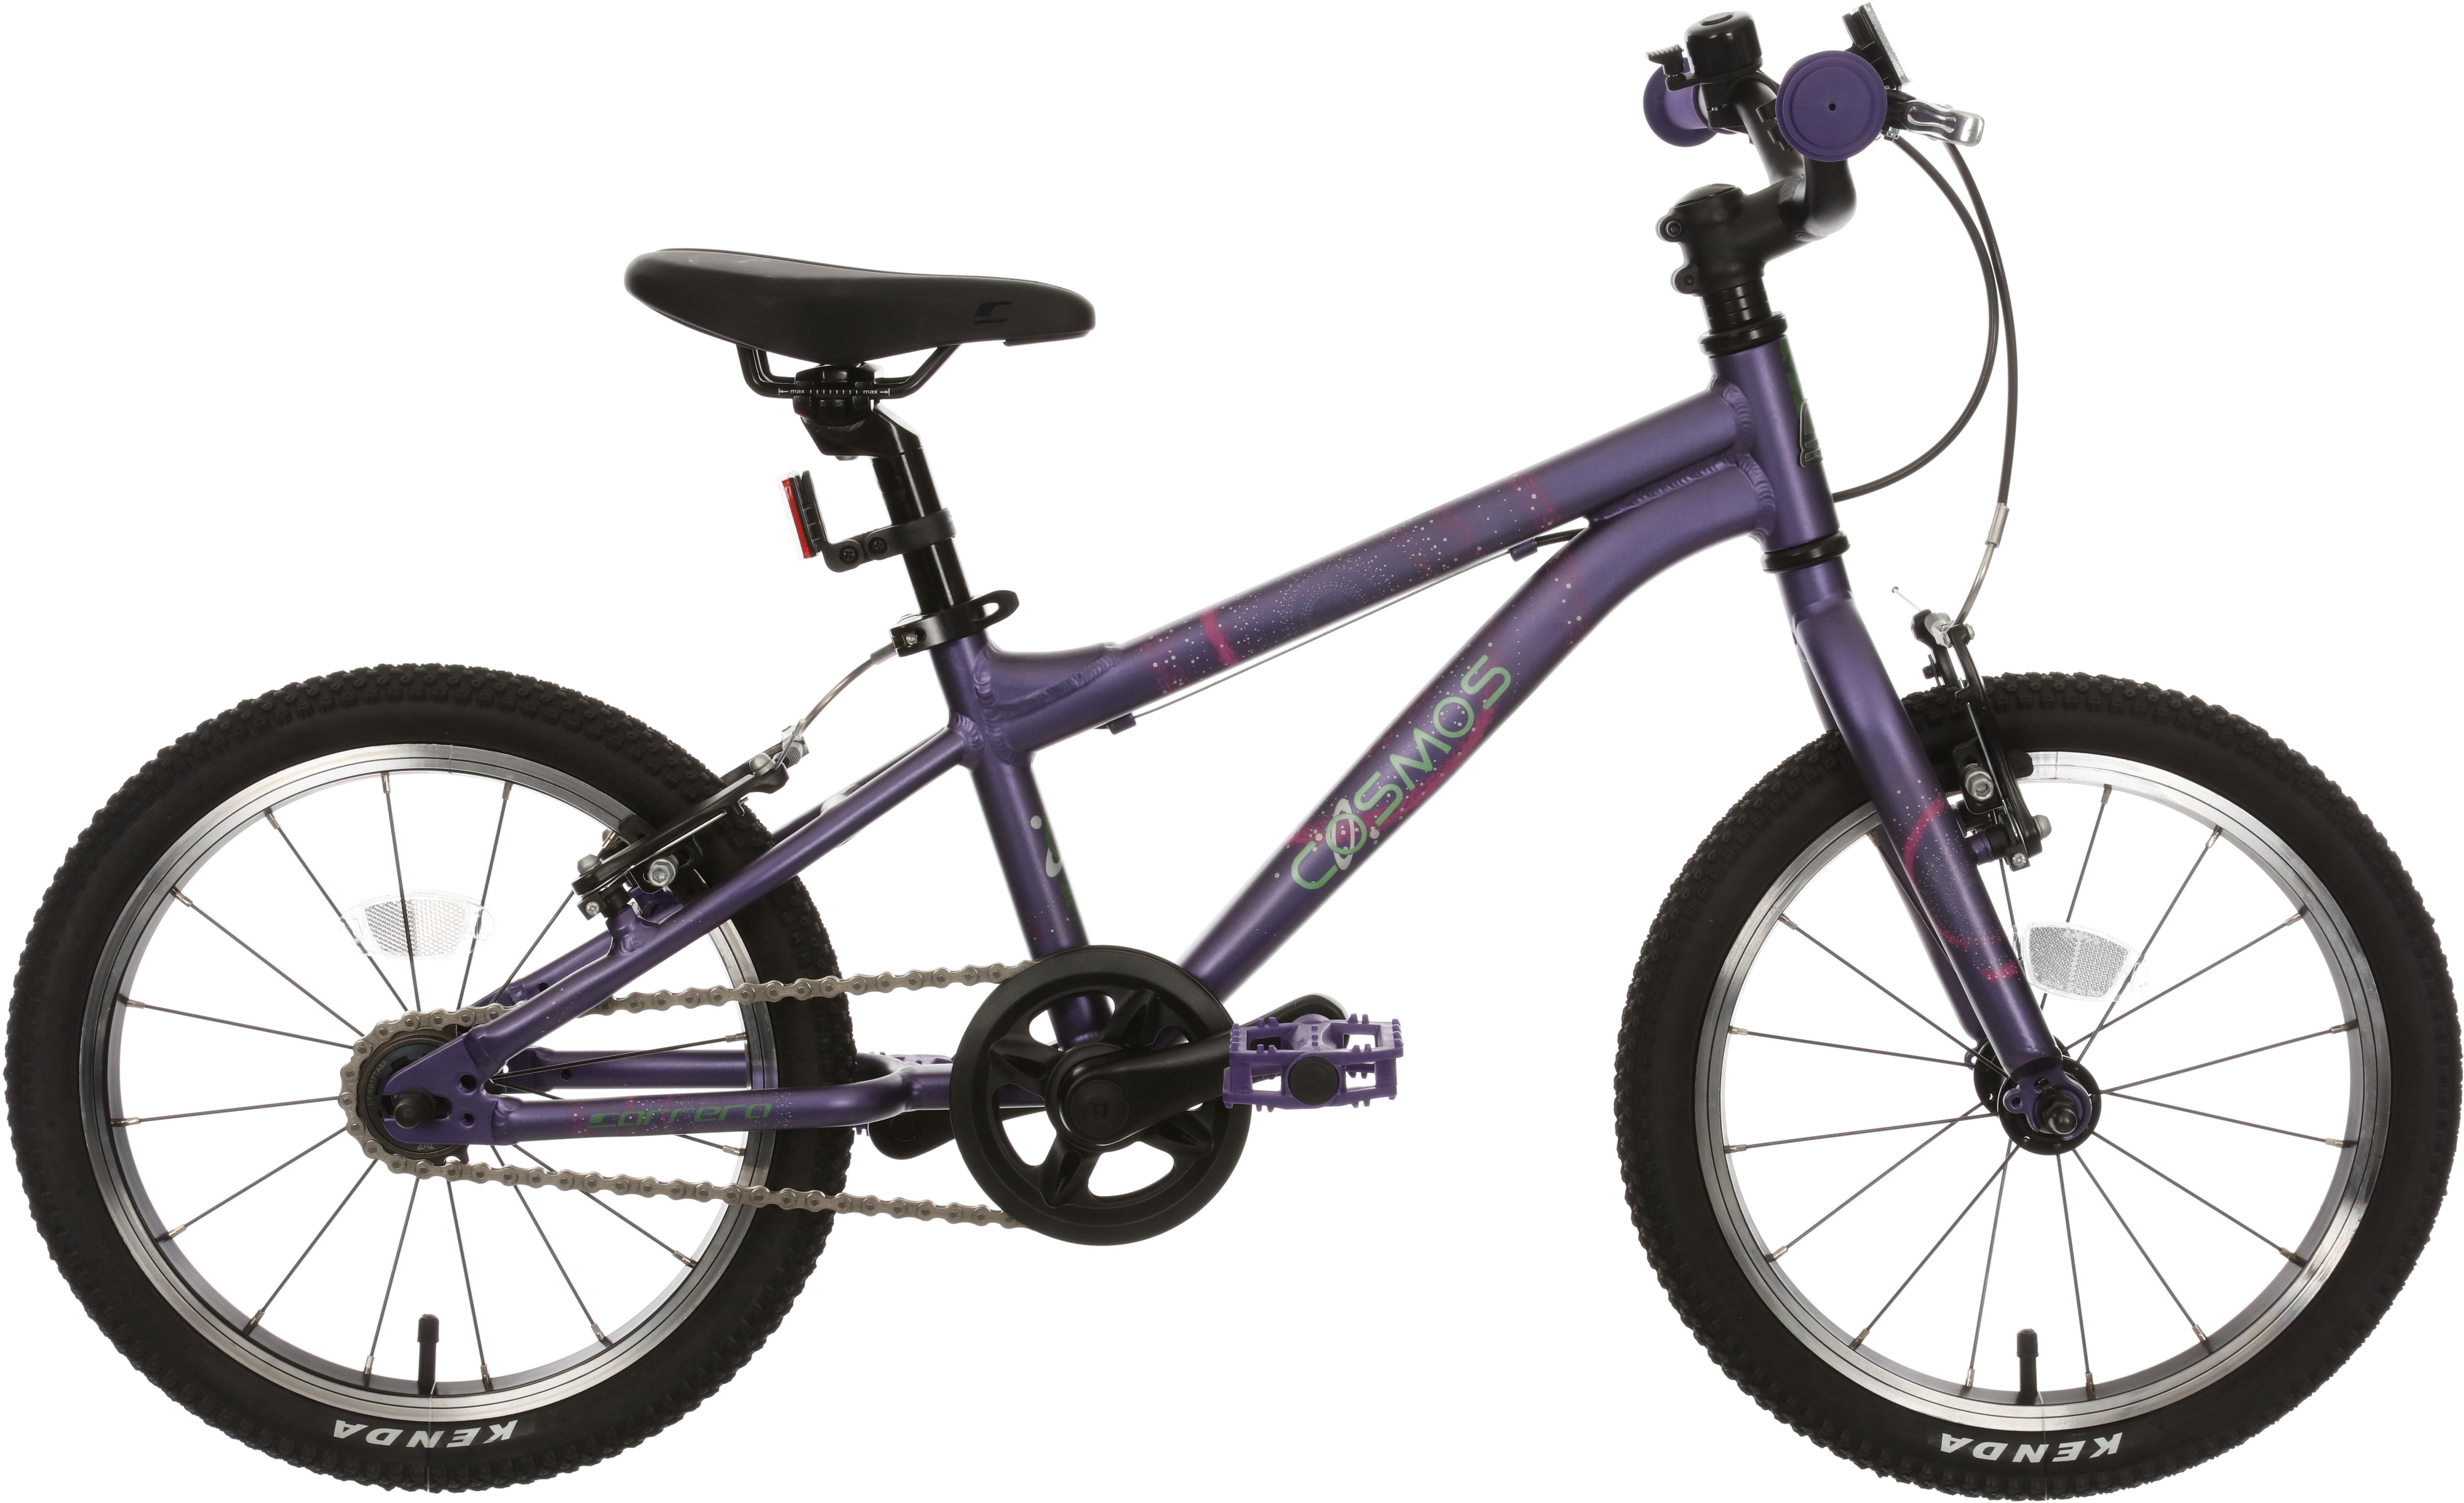 Carrera Cosmos Kids Bike   16 Inch Wheel   Purple